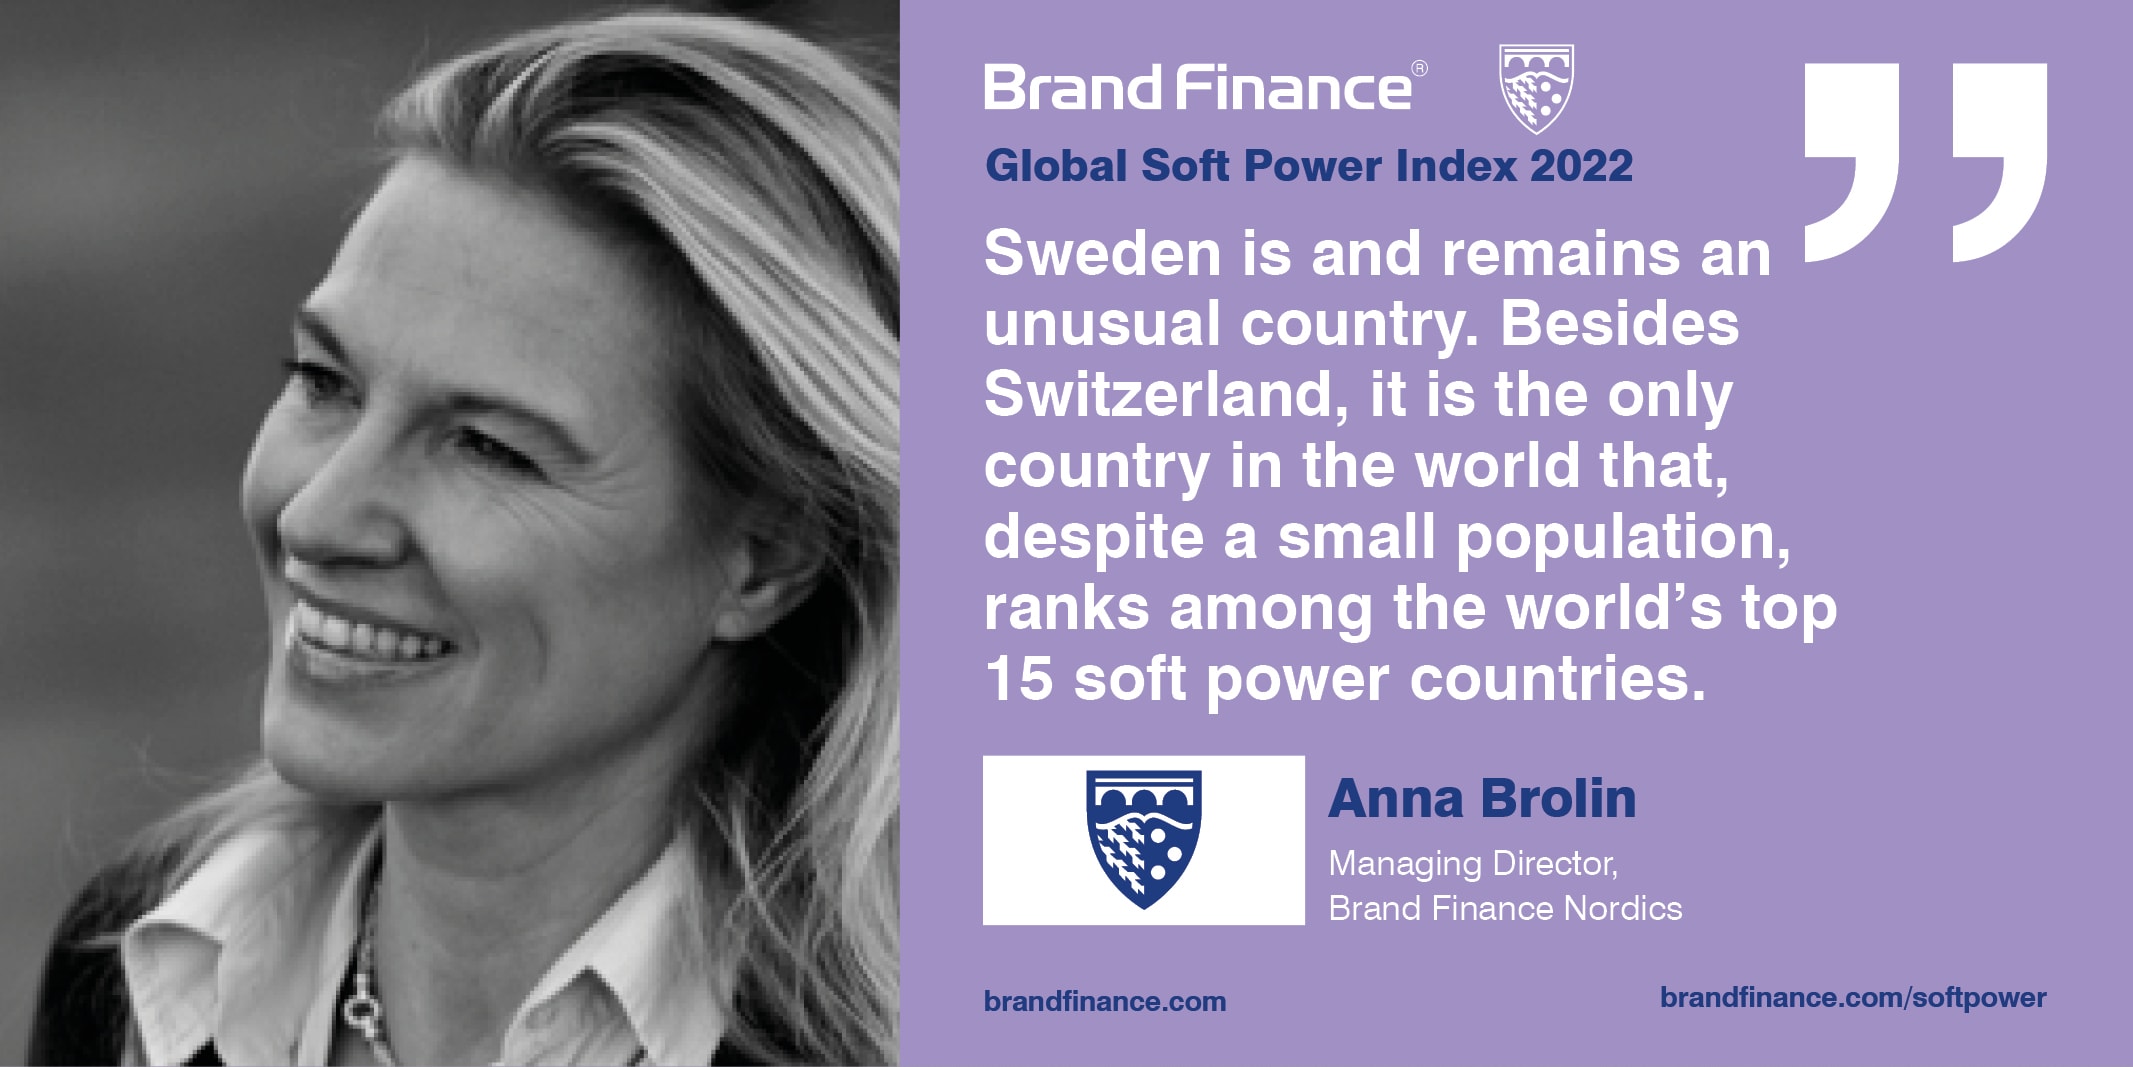 Anna Brolin, Managing Director, Brand Finance Nordics